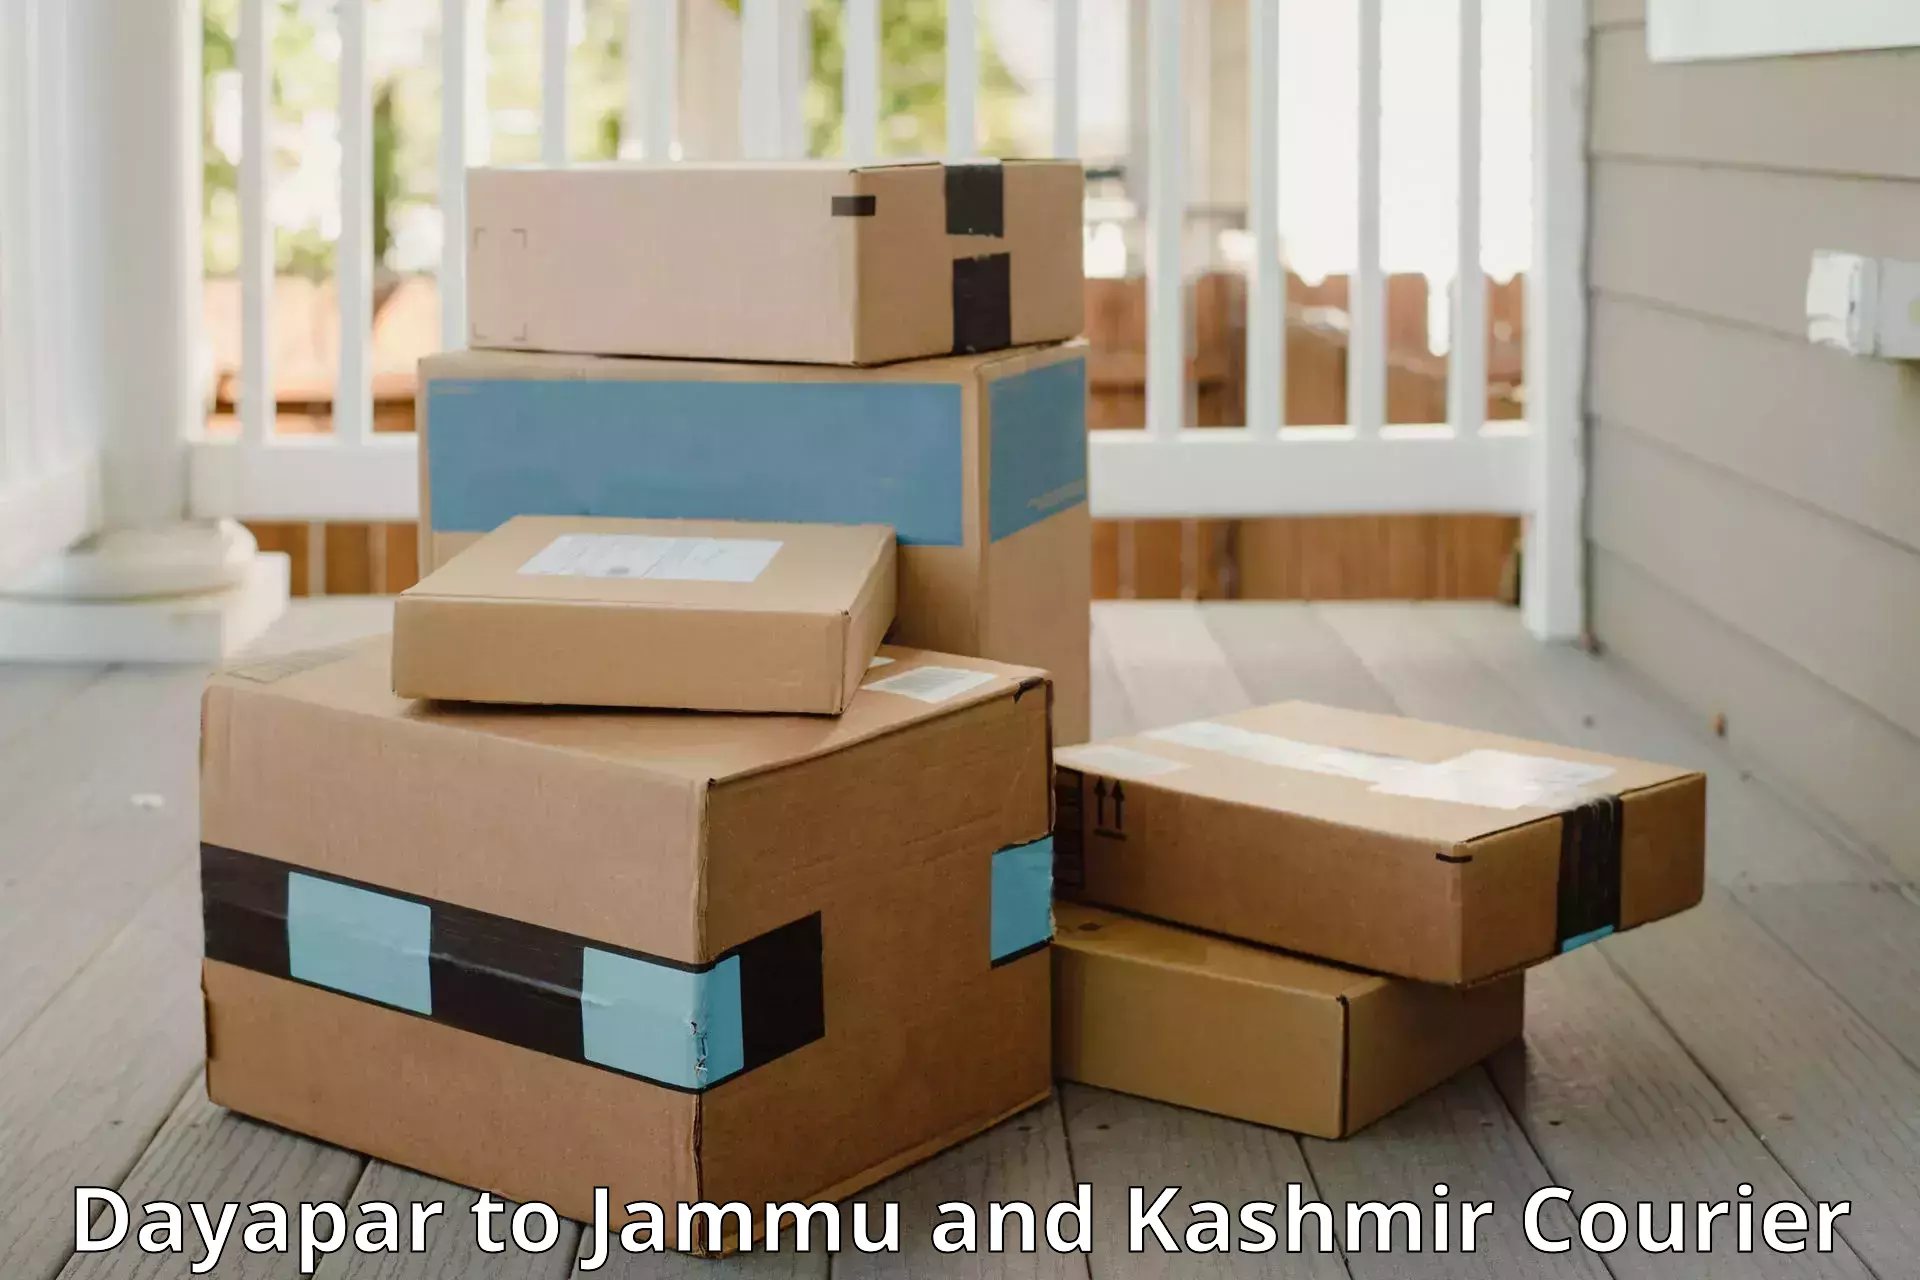 Door-to-door baggage service Dayapar to Jammu and Kashmir